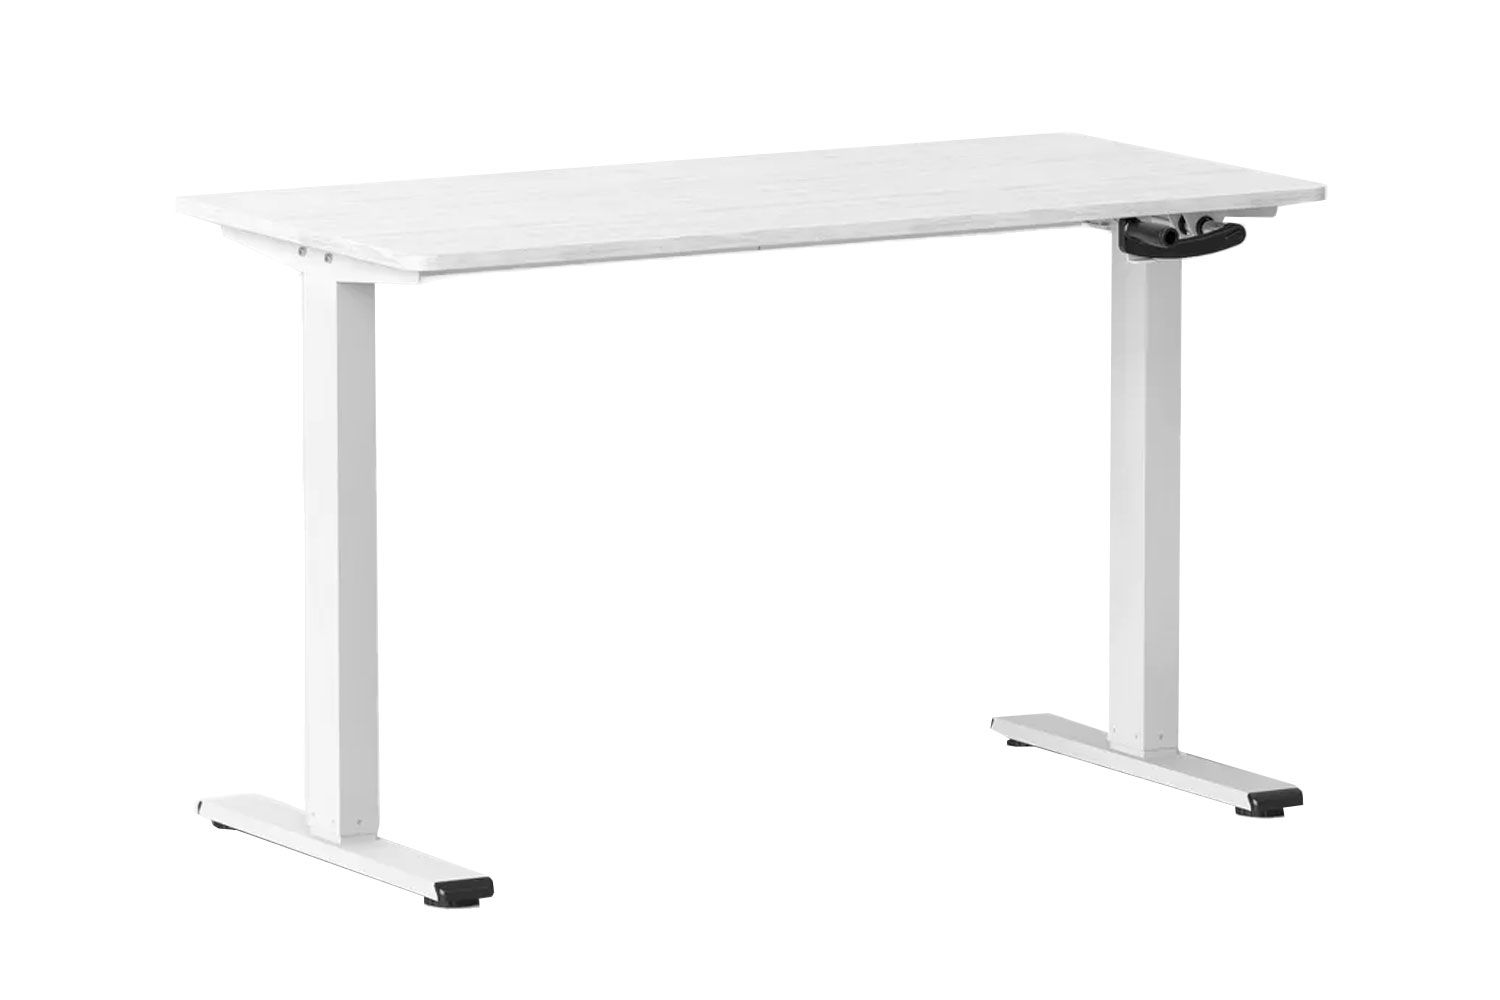 Threshold Loring Manual Height Adjustable Standing Desk 